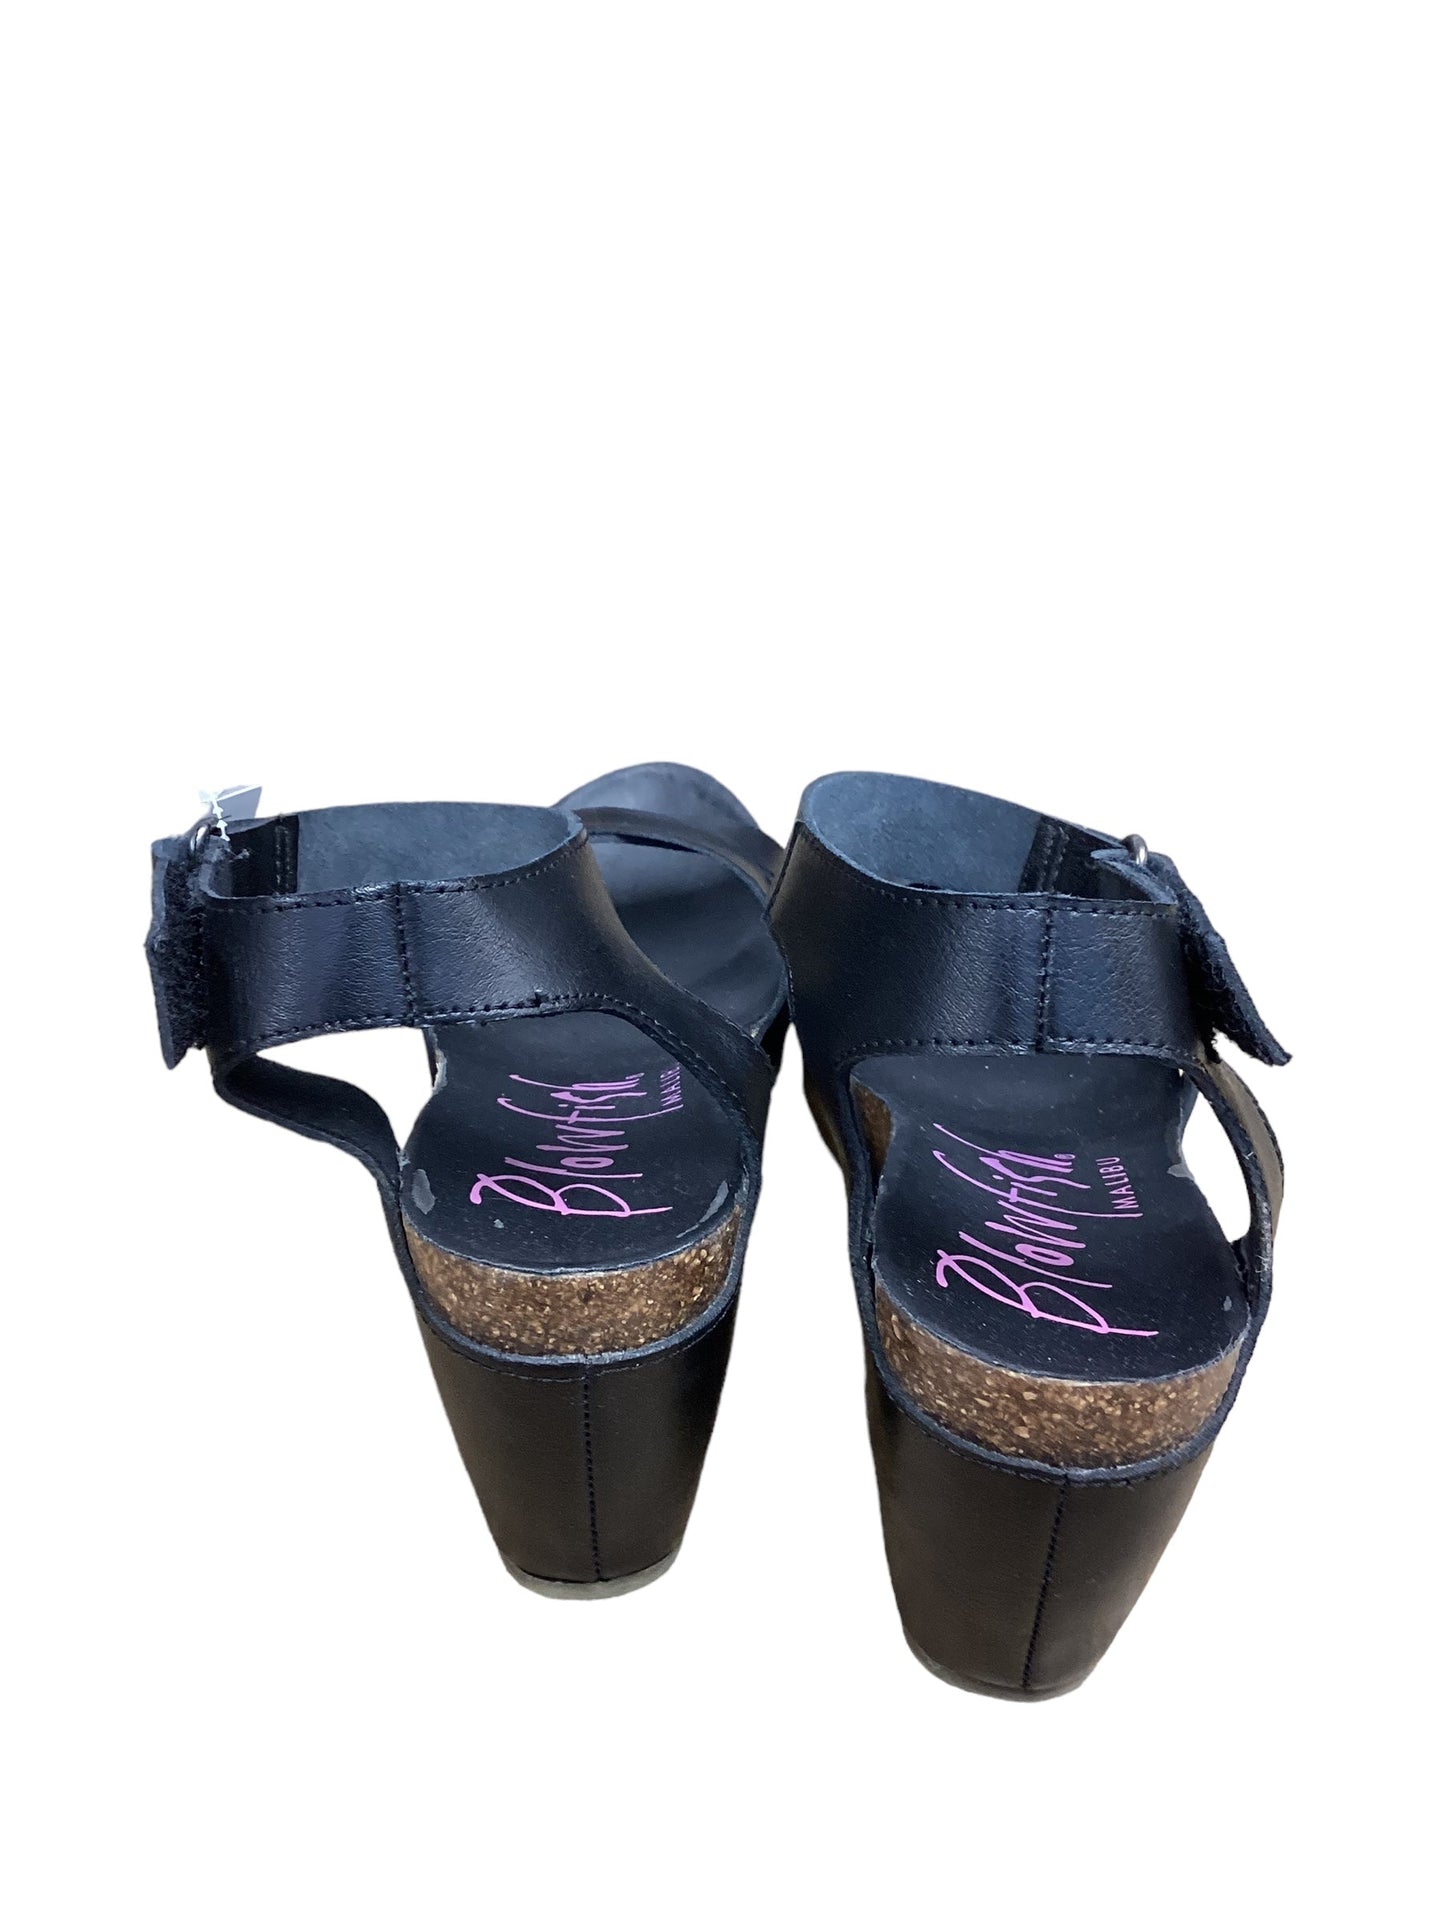 Black Sandals Heels Wedge Blowfish, Size 8